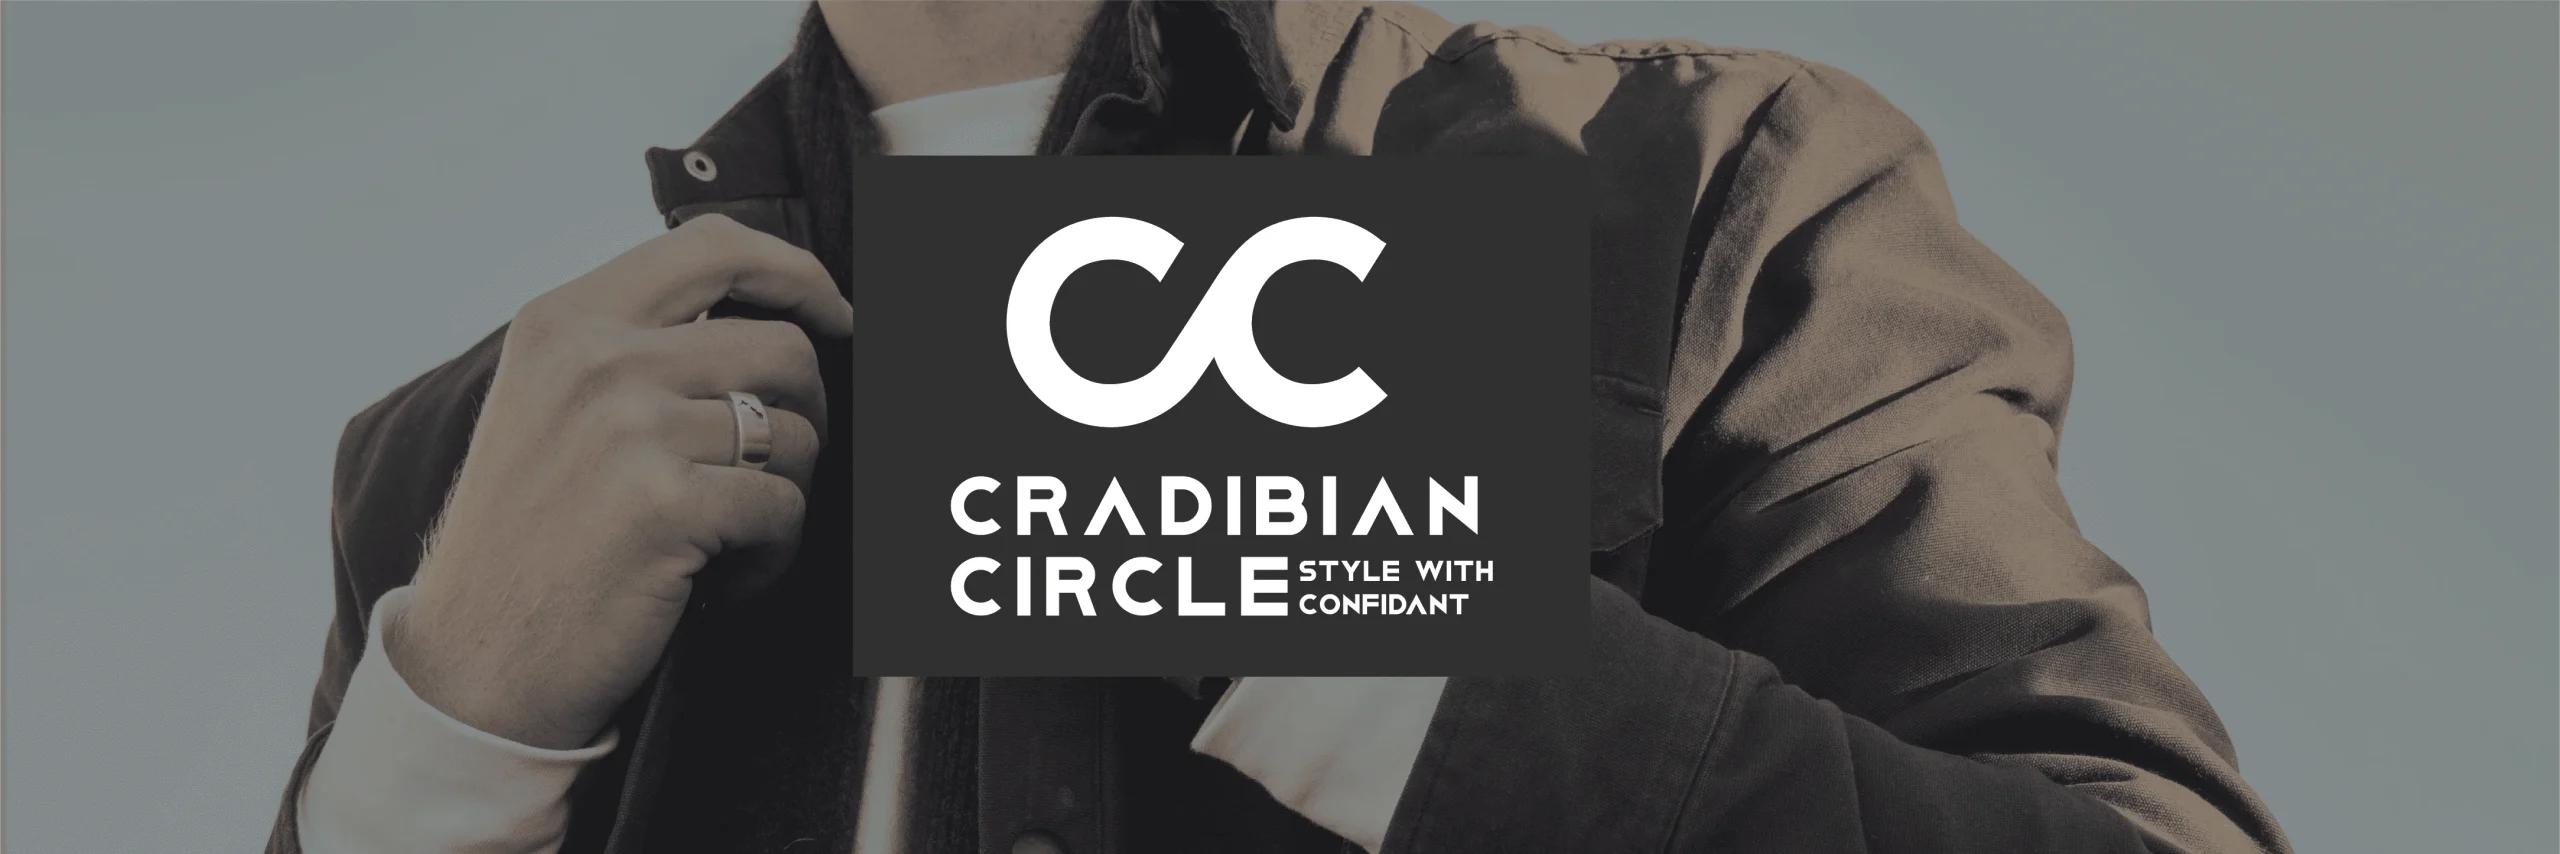 cradibial circle fashion brand logo mokeup